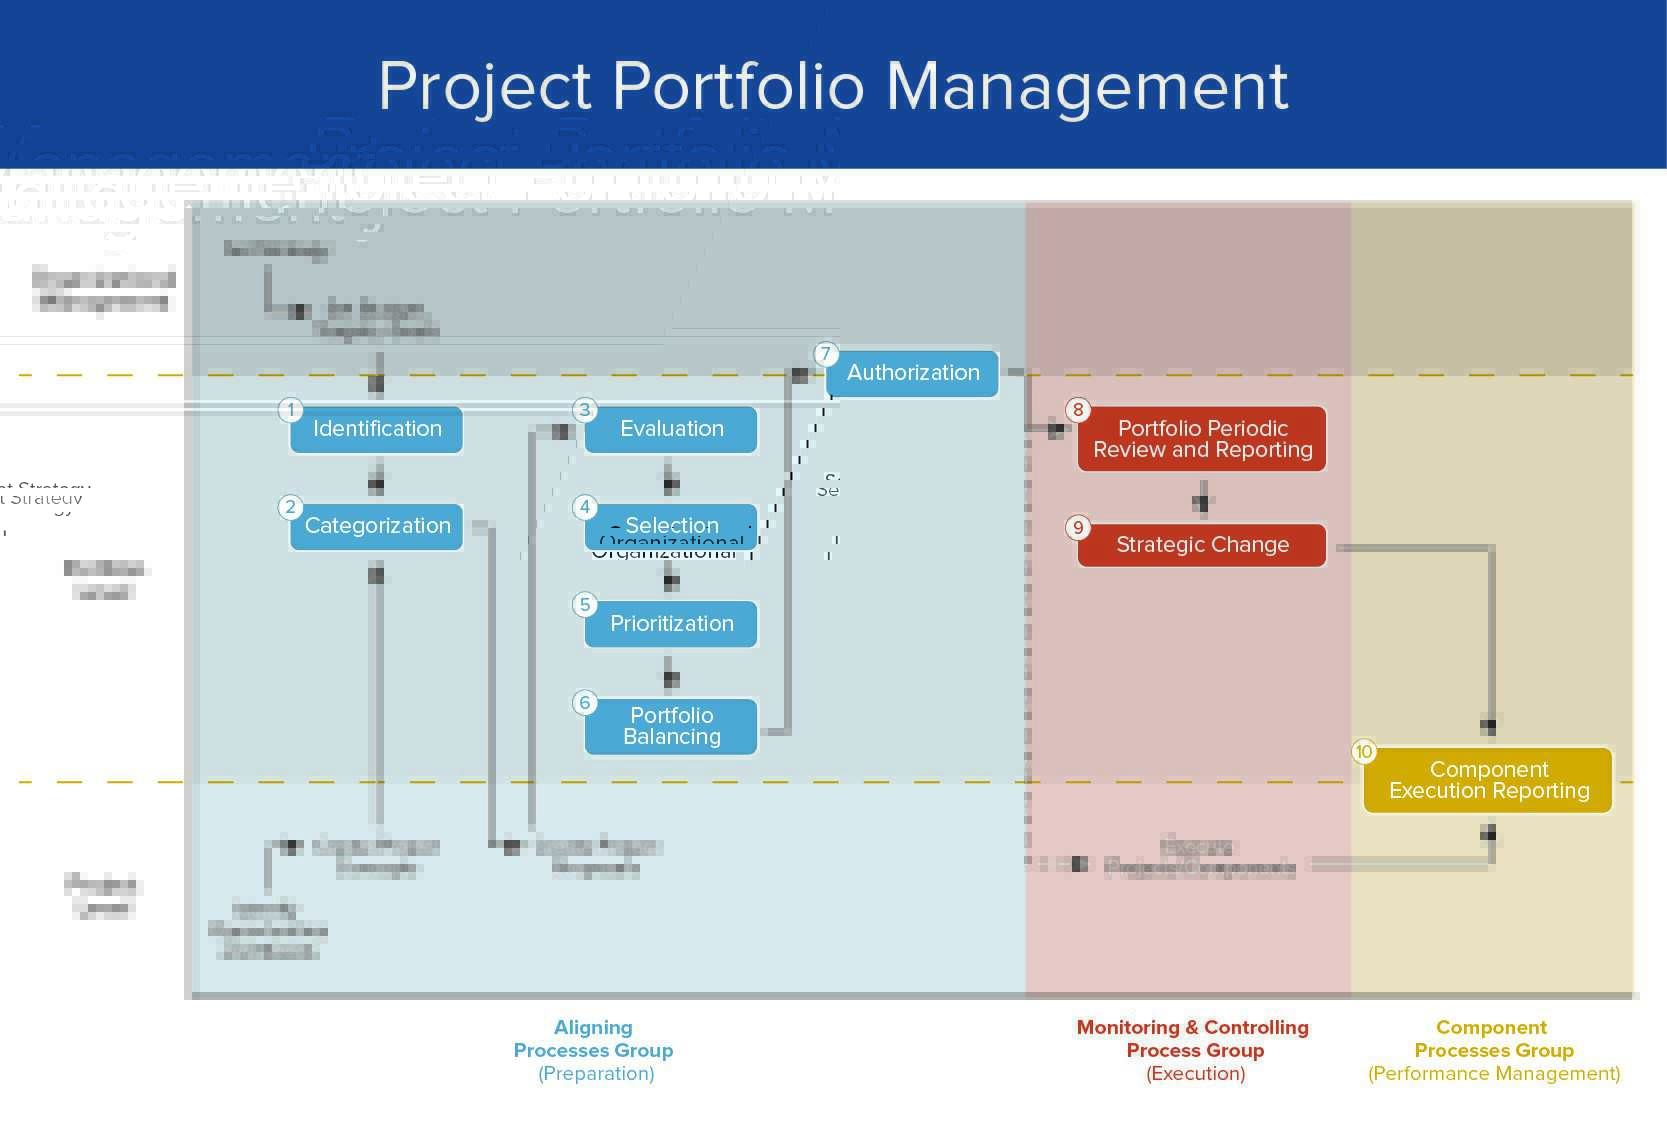 Project Portfolio Management Phases